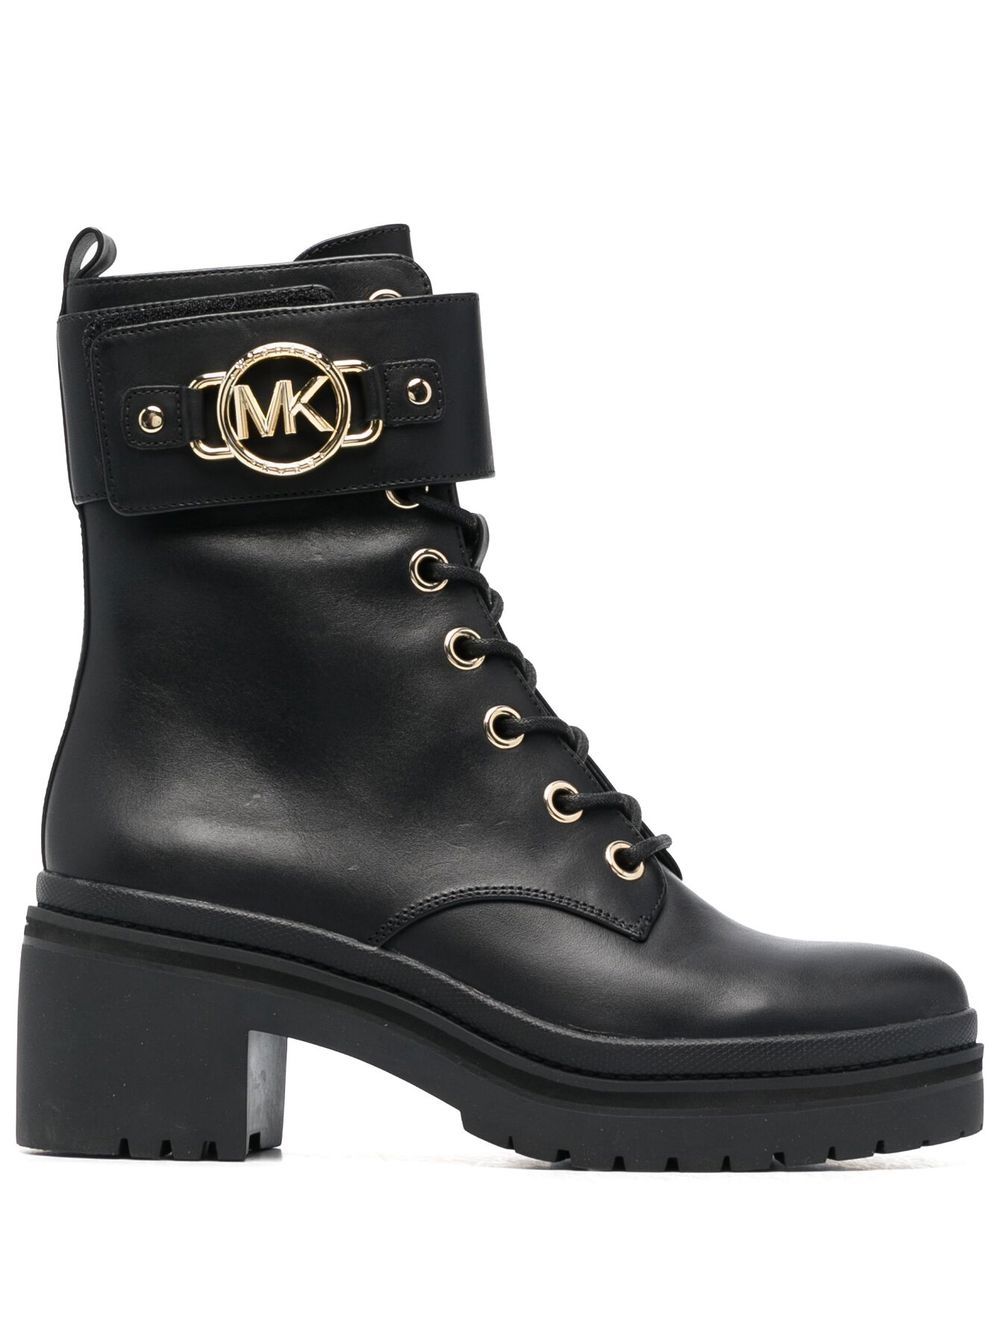 Michael Kors Rory leather combat boots - Black von Michael Kors